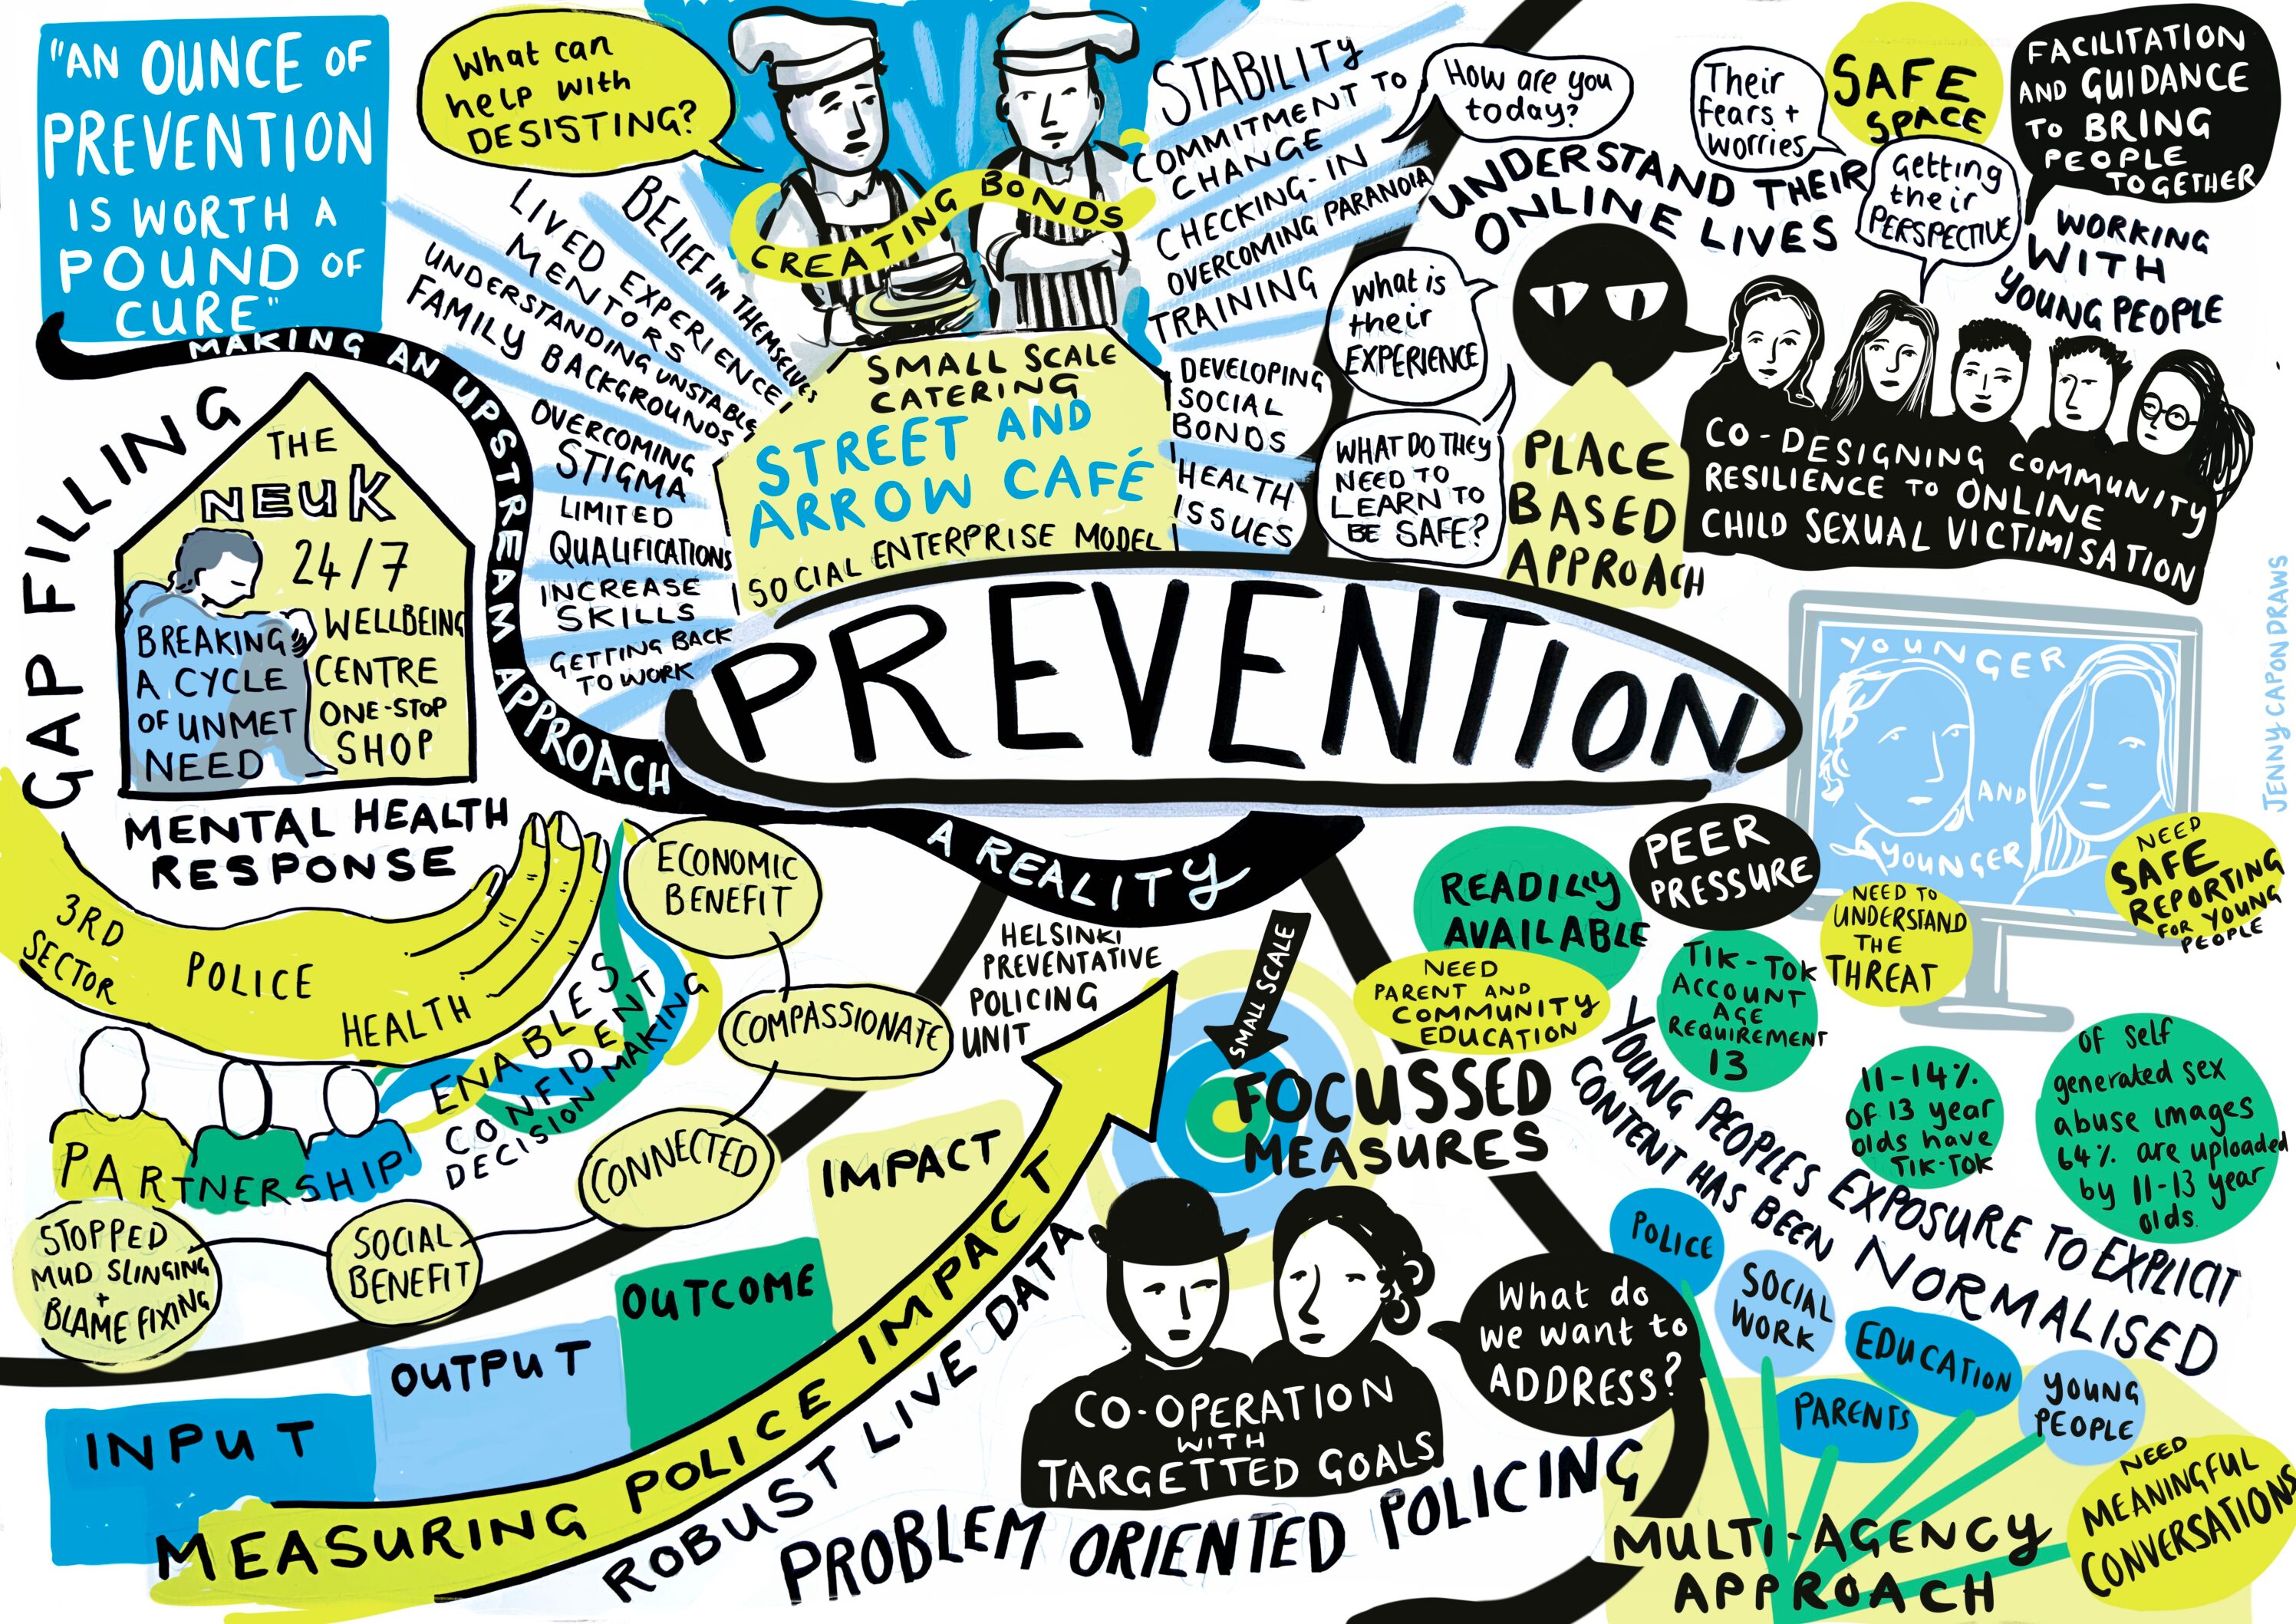 Prevention[51]